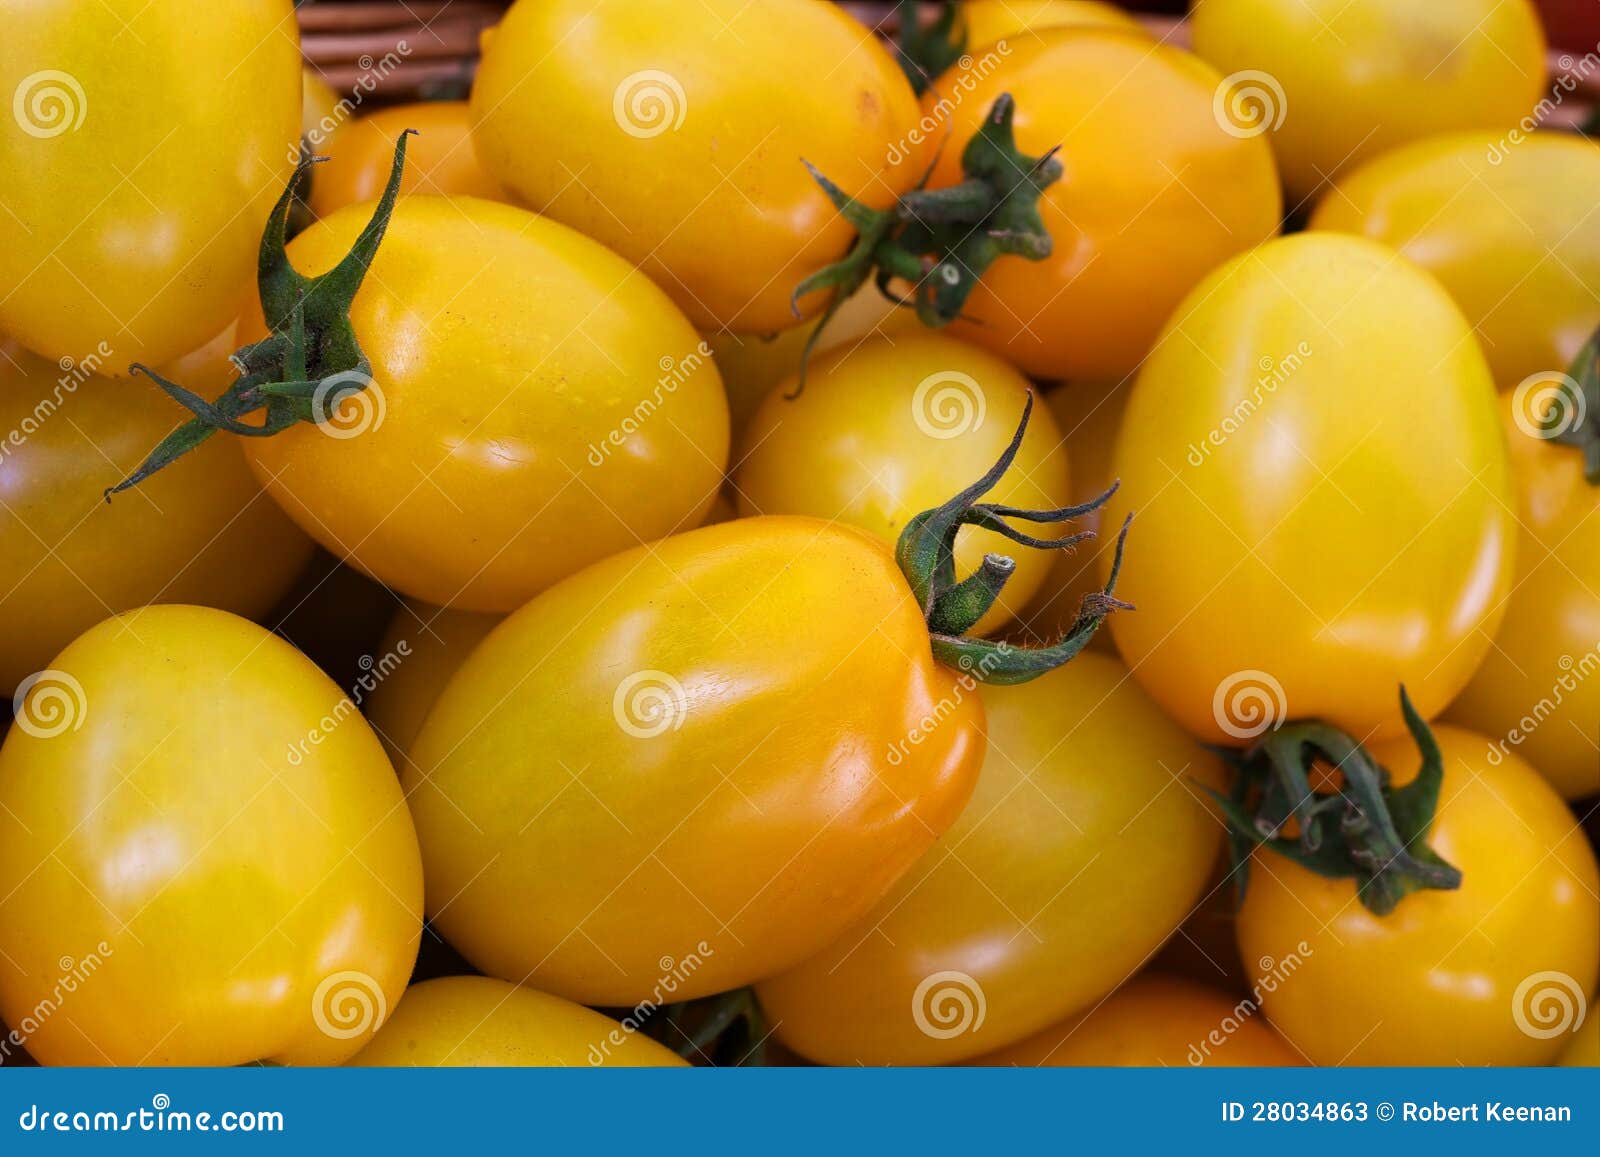 Yellow Plum Tomato